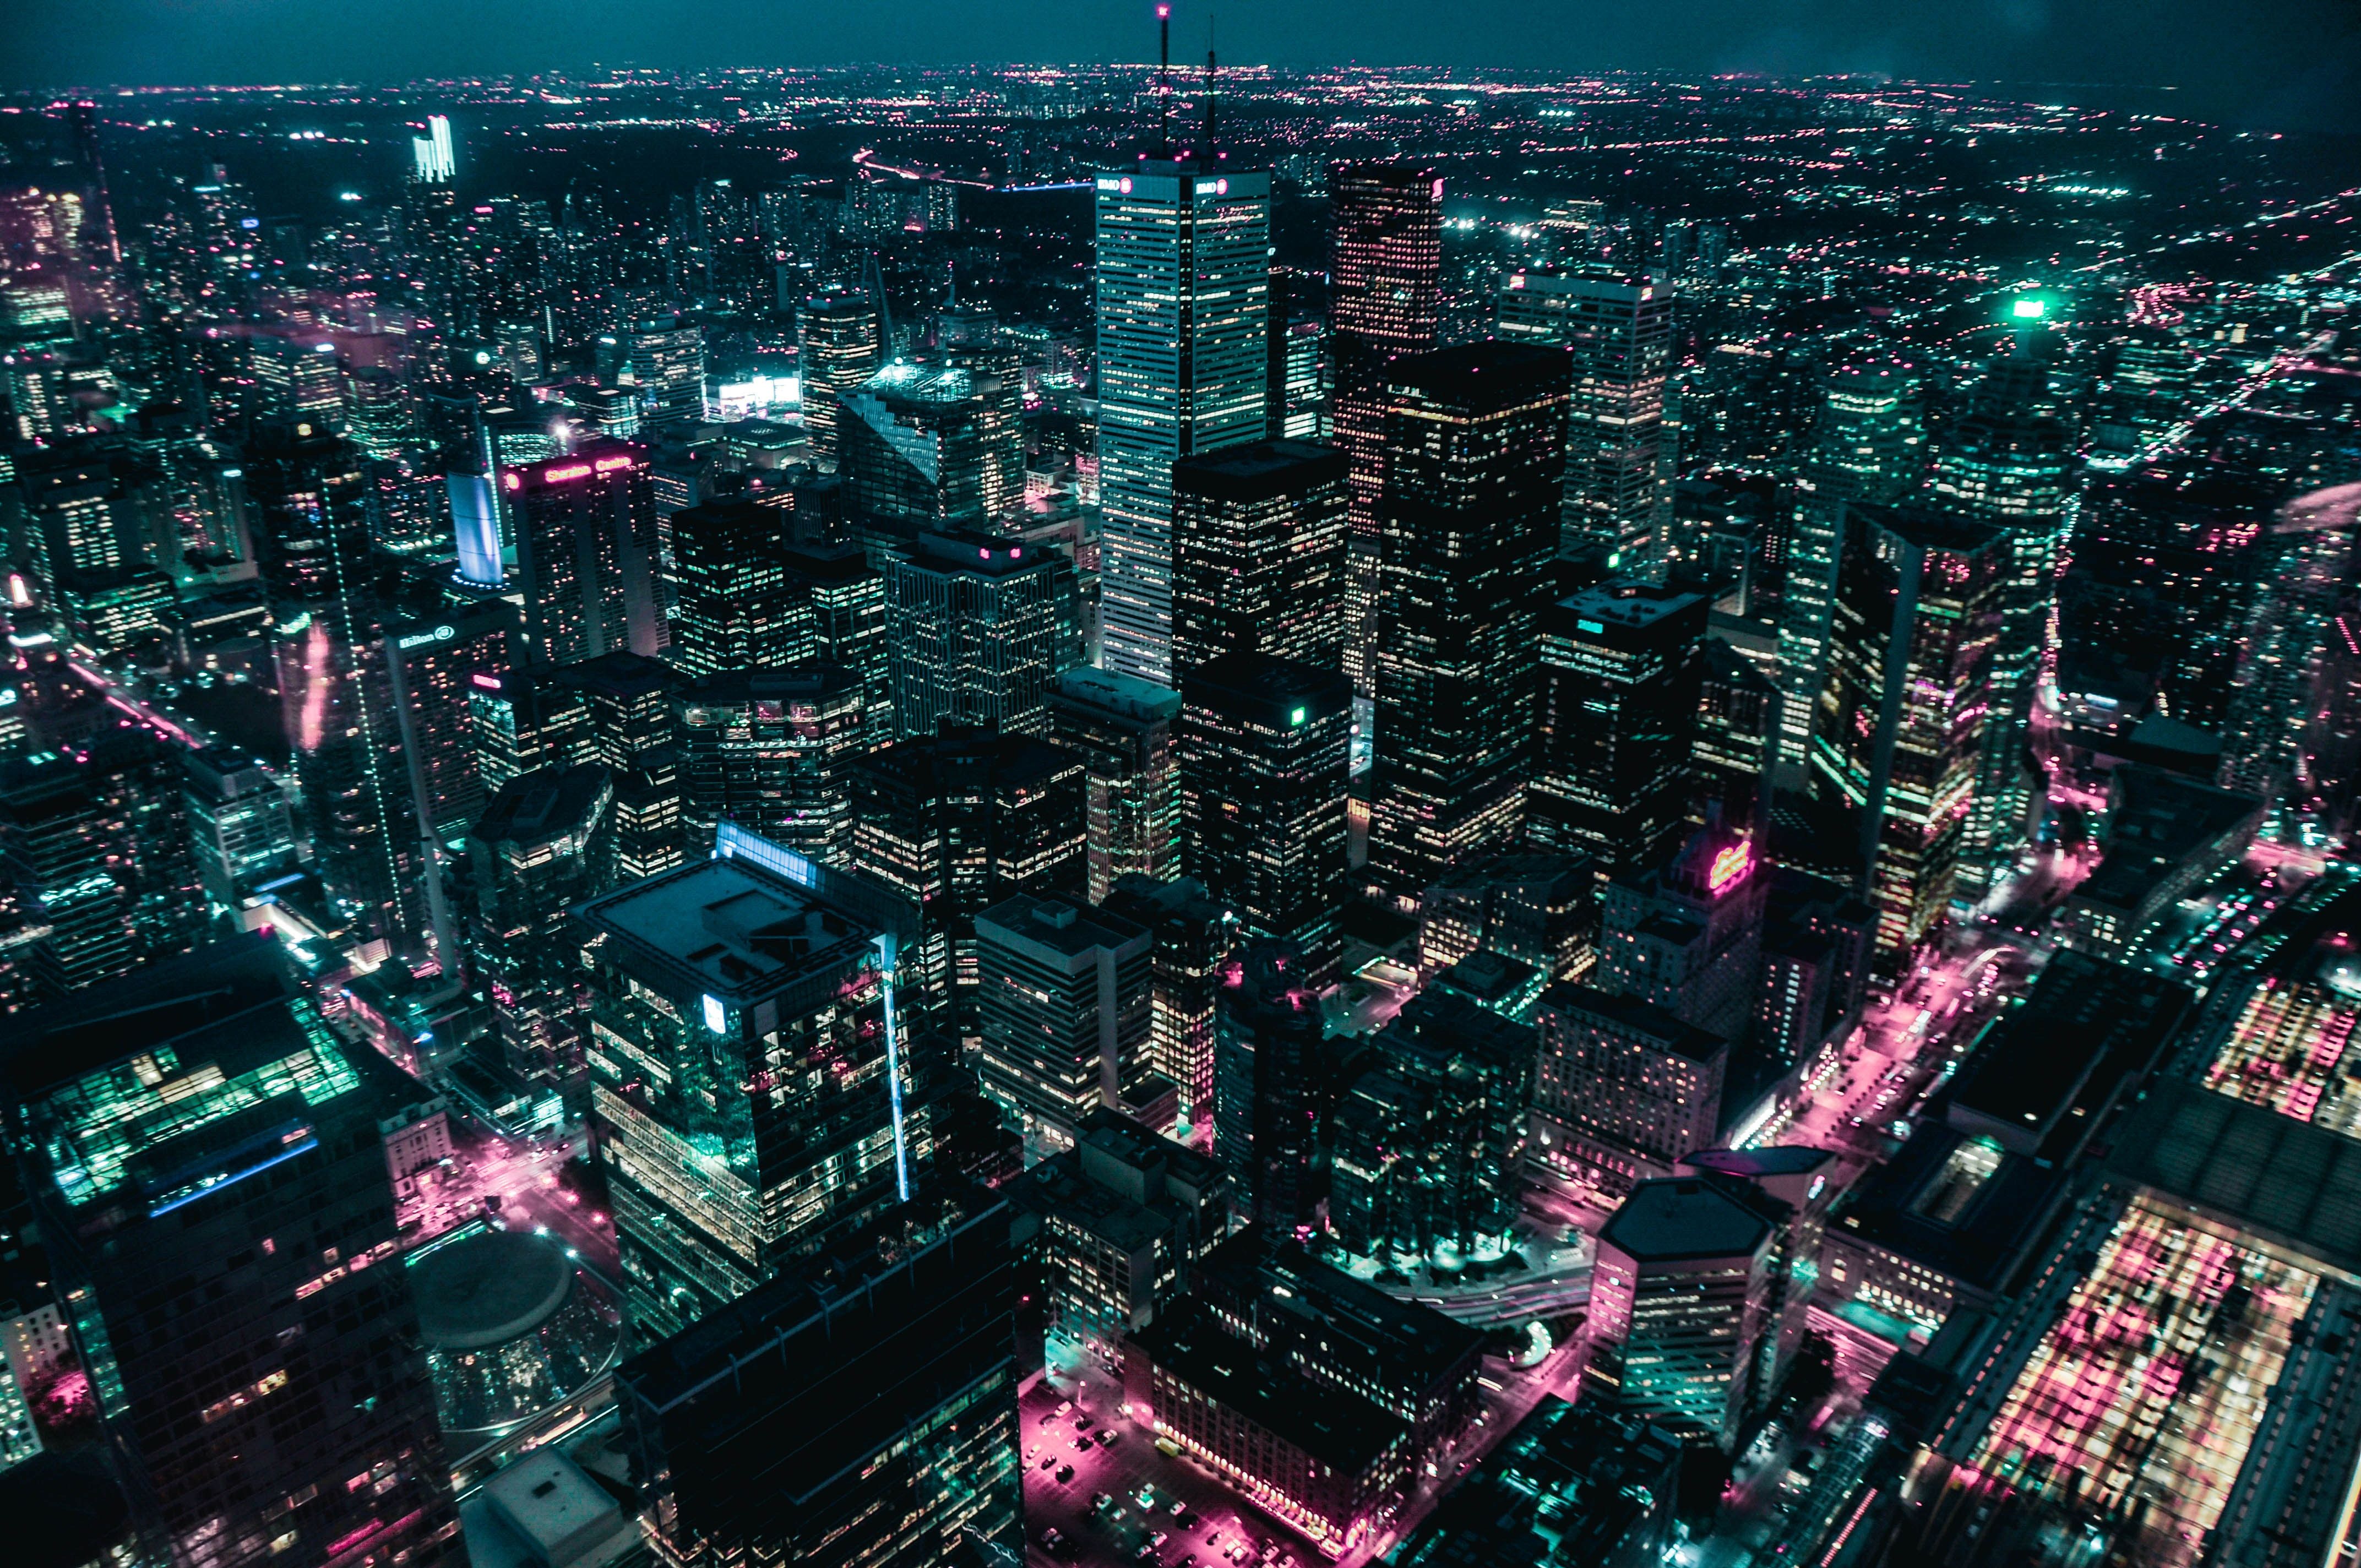 A city skyline at night with neon lights - City, anime city